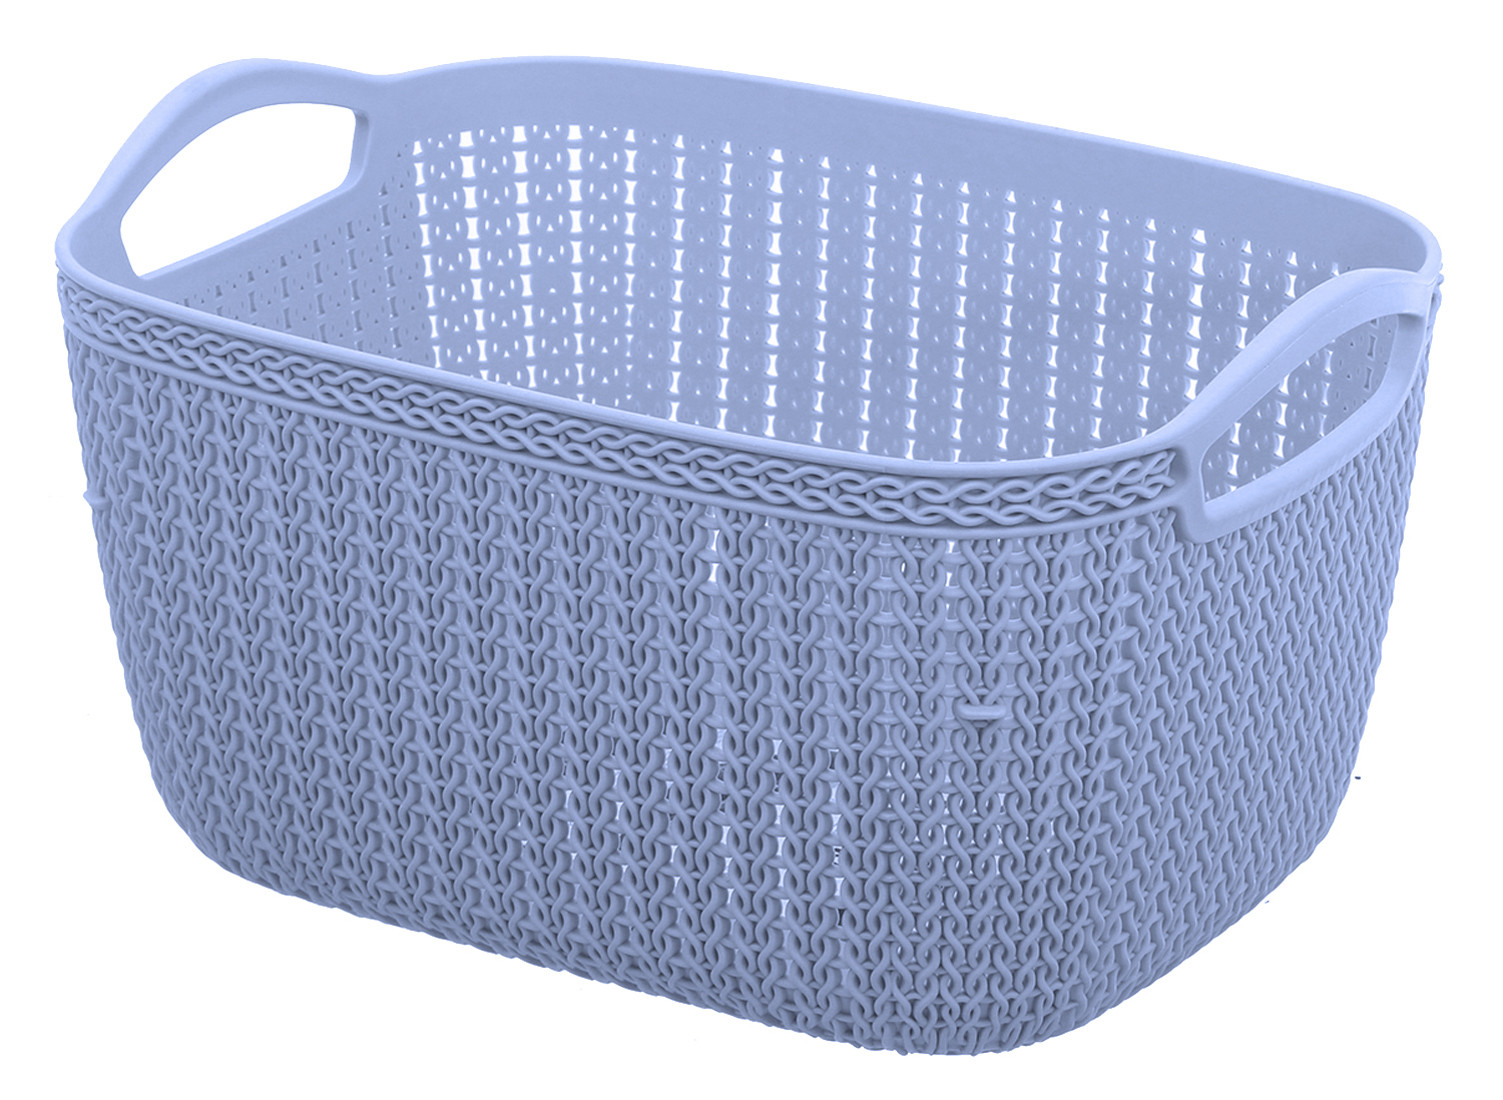 Kuber Industries Unbreakable Plastic Multipurpose Large Size Flexible Storage Baskets / Fruit Vegetable Bathroom Stationary Home Basket with Handles (Brown & Grey) -CTKTC37849